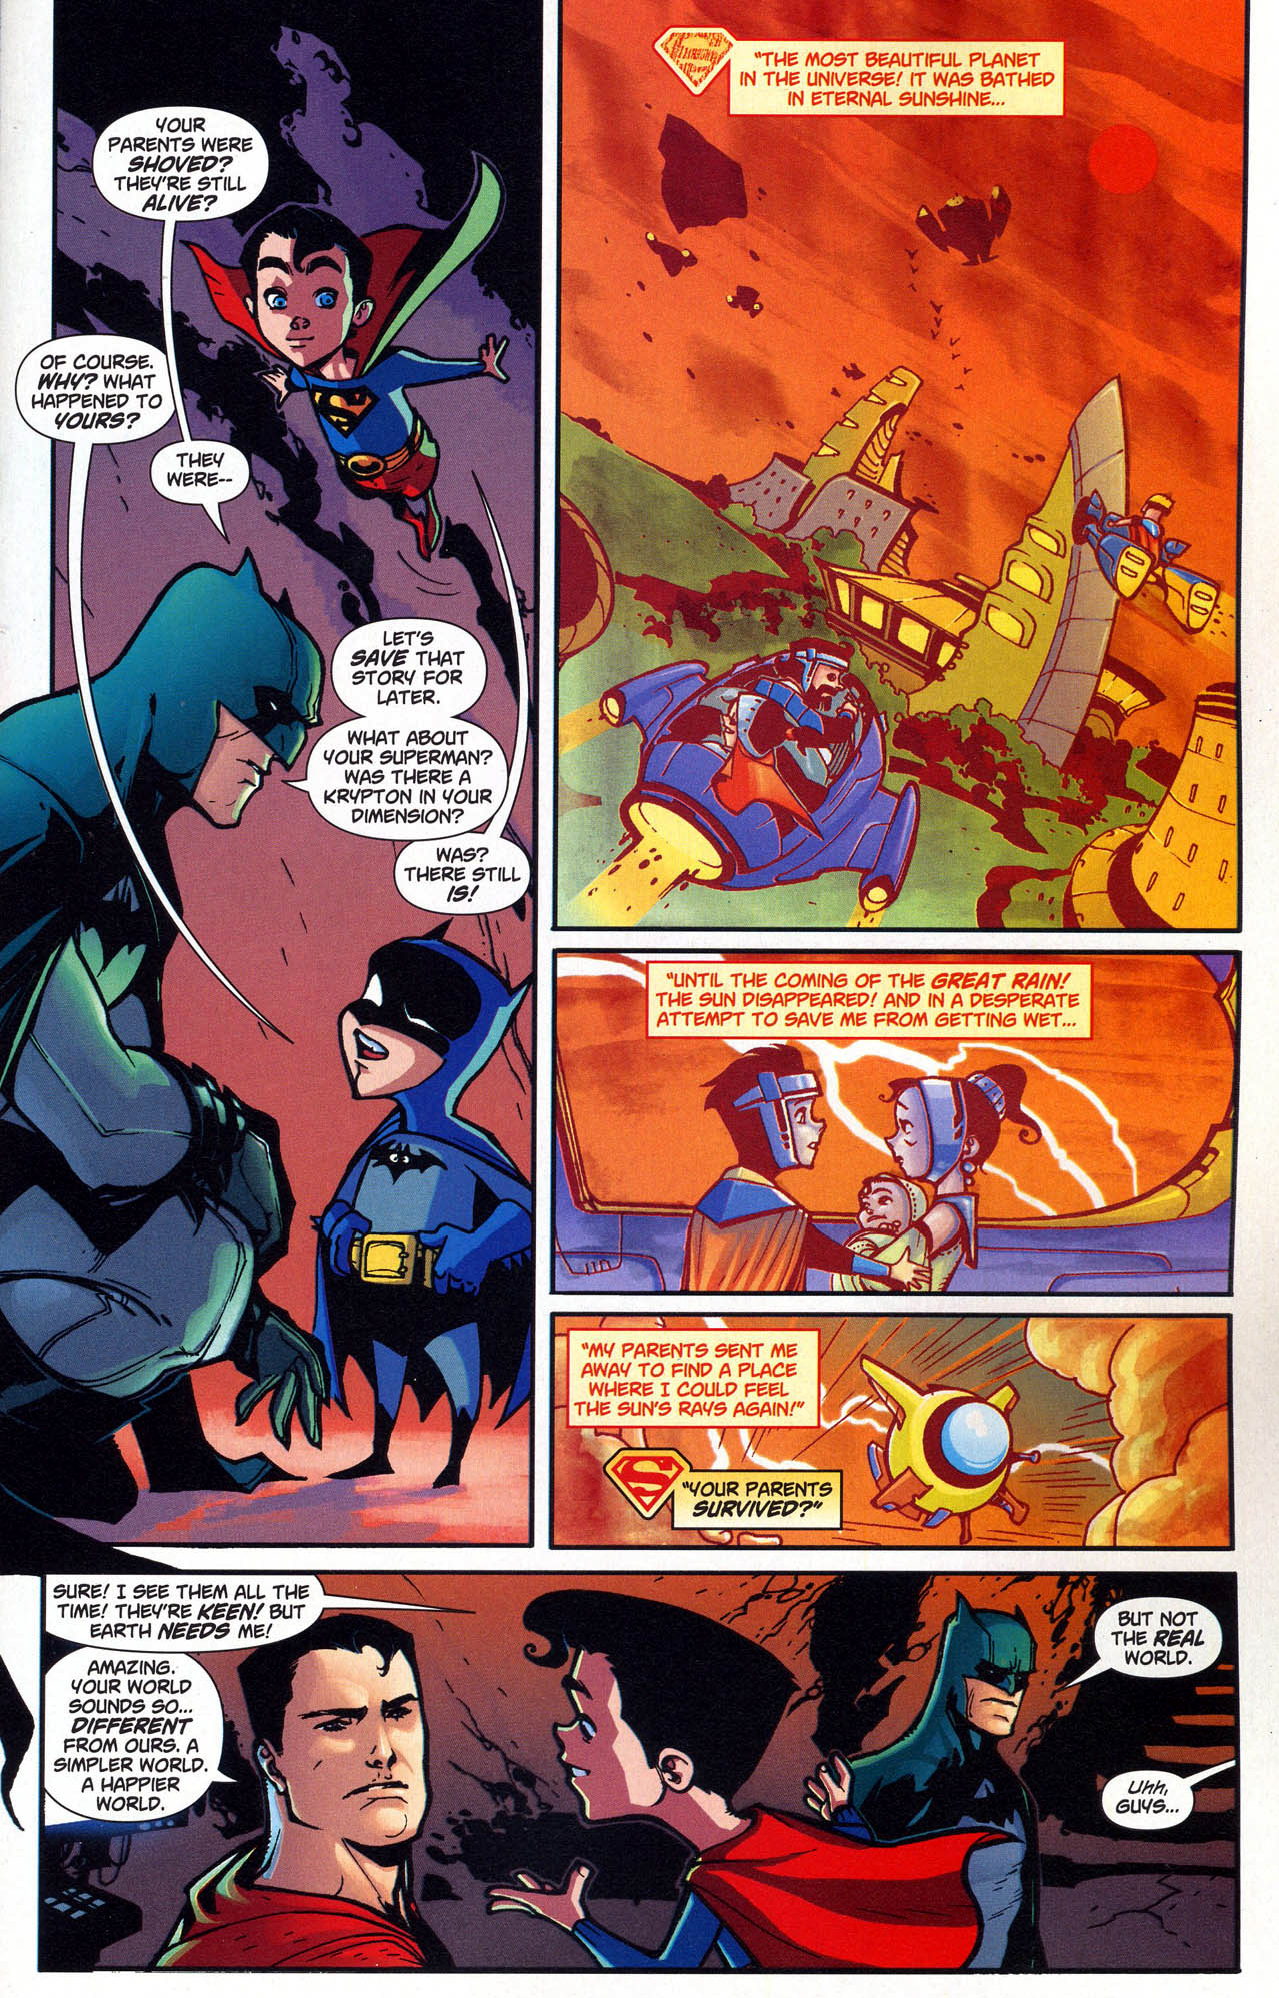 mini batman and superman's origin story